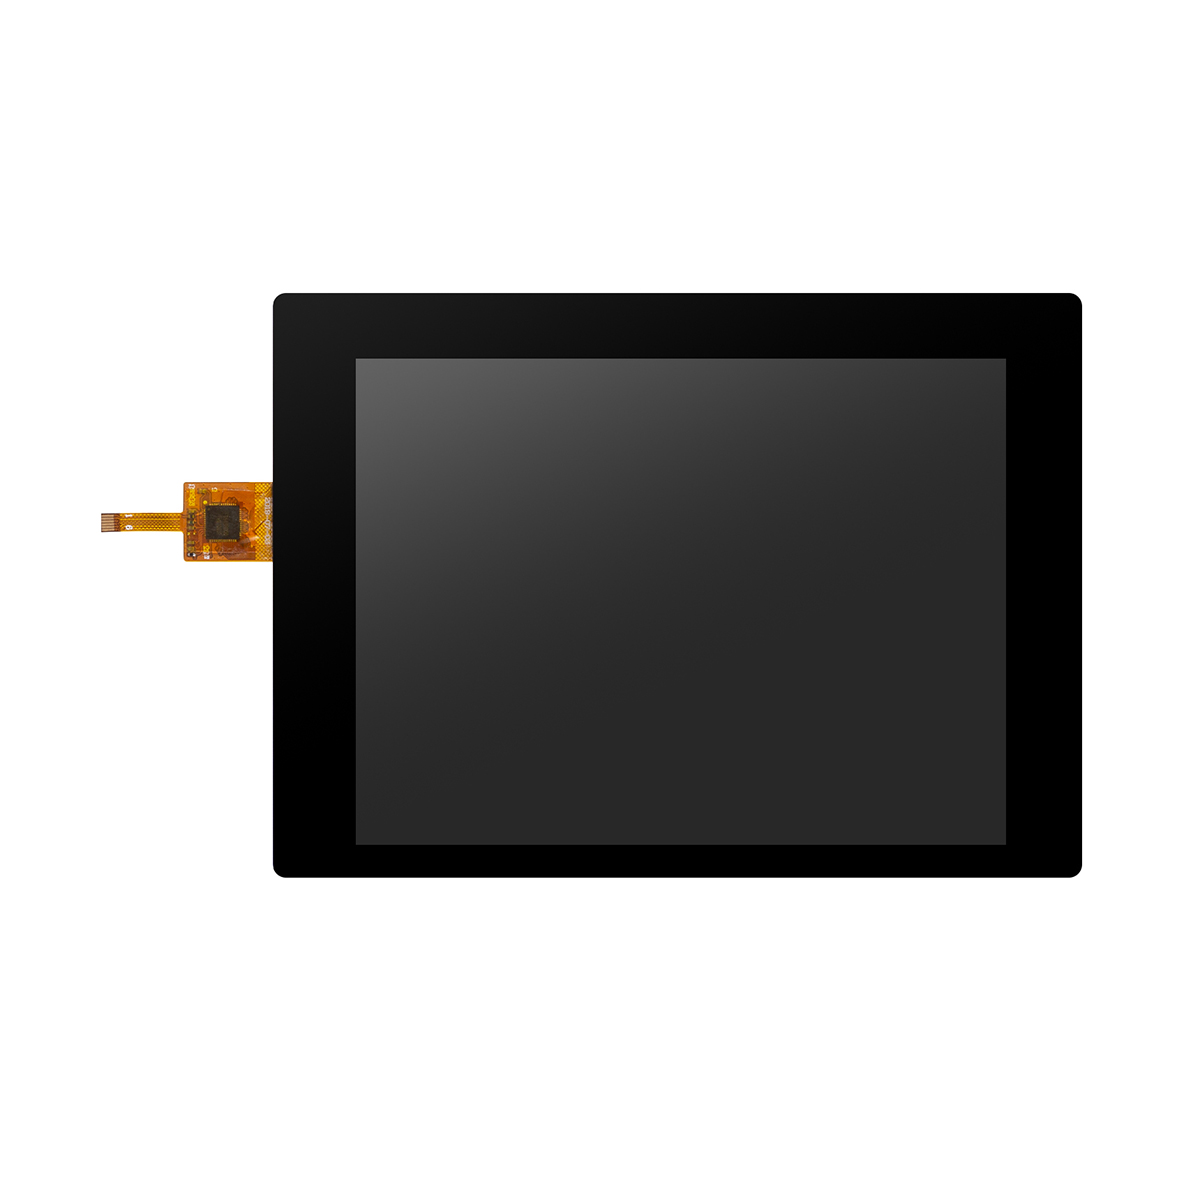 5.7 دىيۇملۇق ئەينەك تاختا LCD سېزىمچان ئېكران ماسلاشتۇرۇلغان ئالاھىدە ئىقتىدار